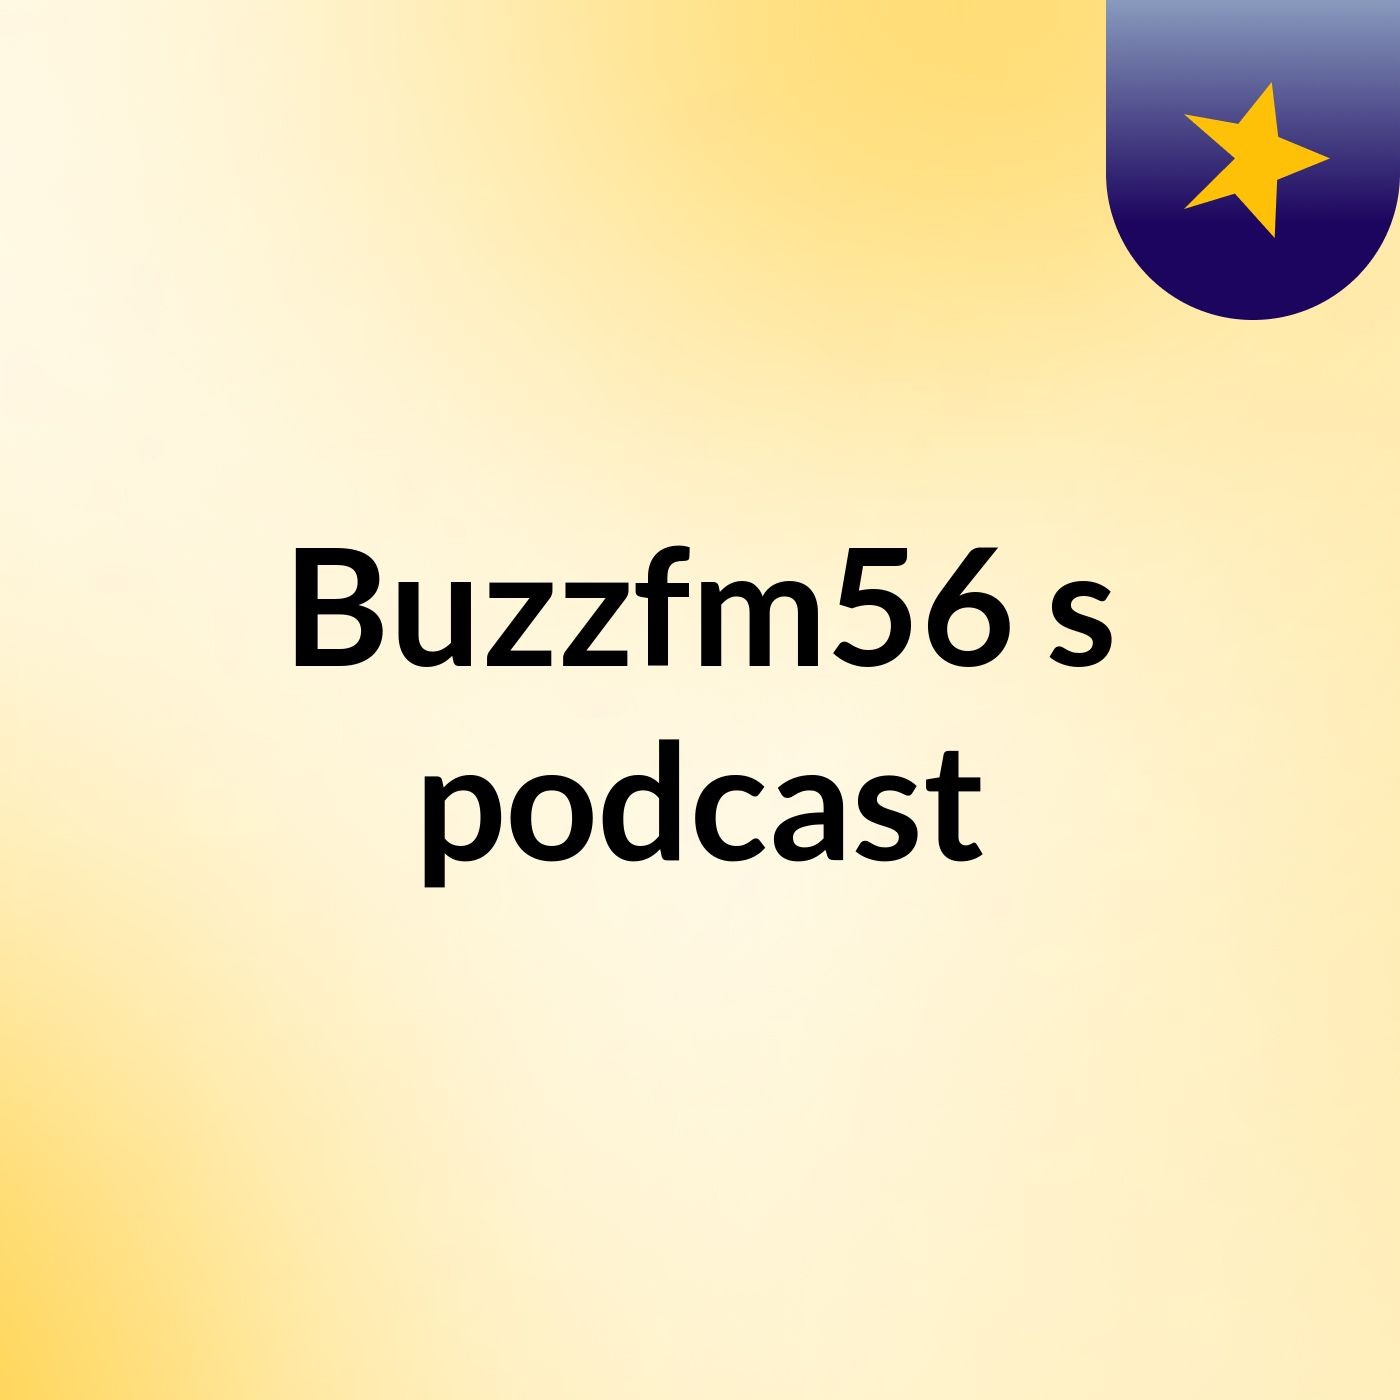 Episode 8 - Buzzfm56's podcast